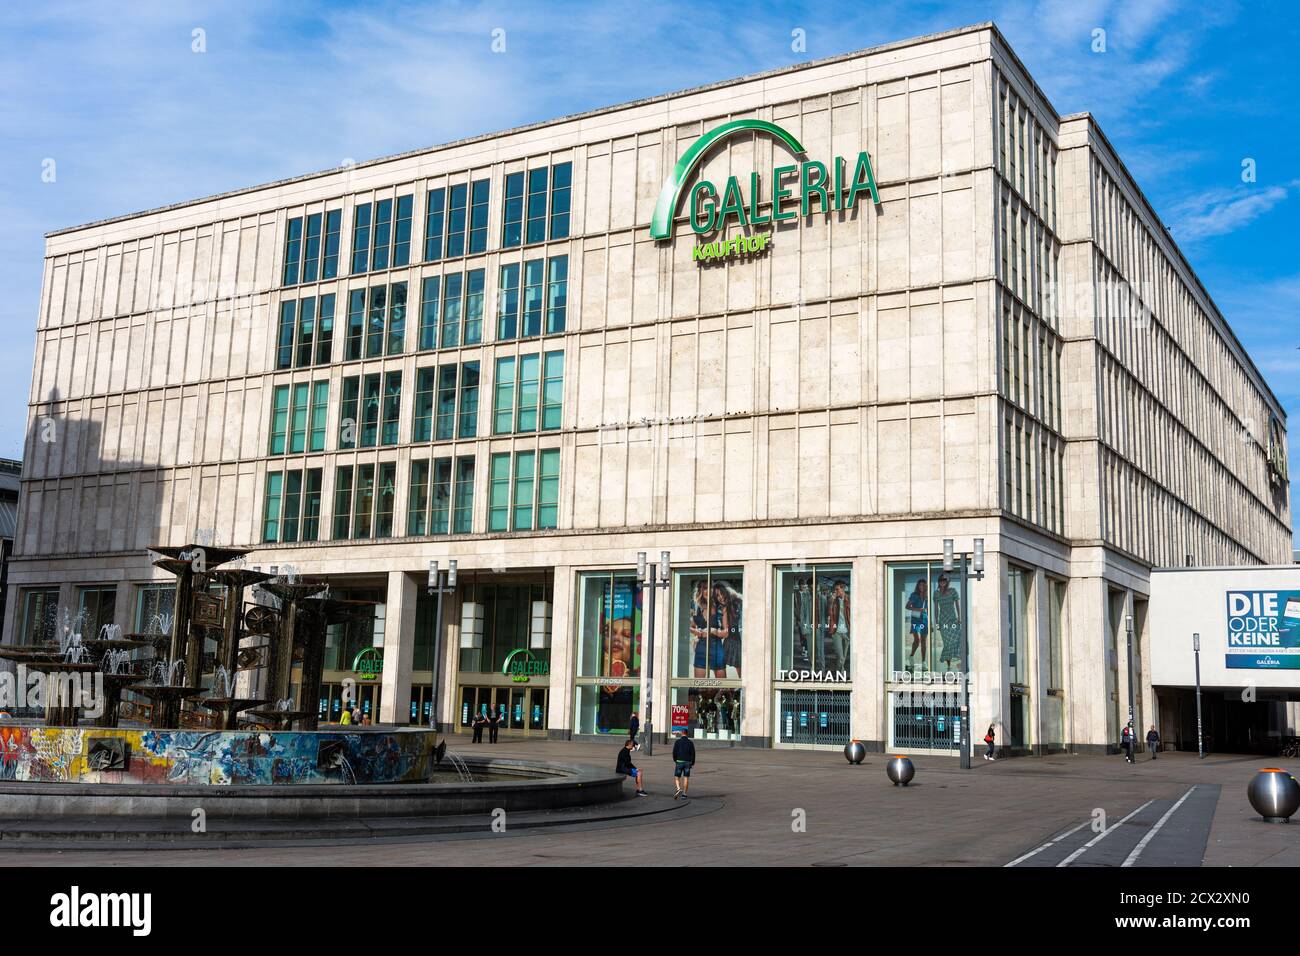 Galeria Kaufhof department store on Alexanderplatz Stock Photo - Alamy